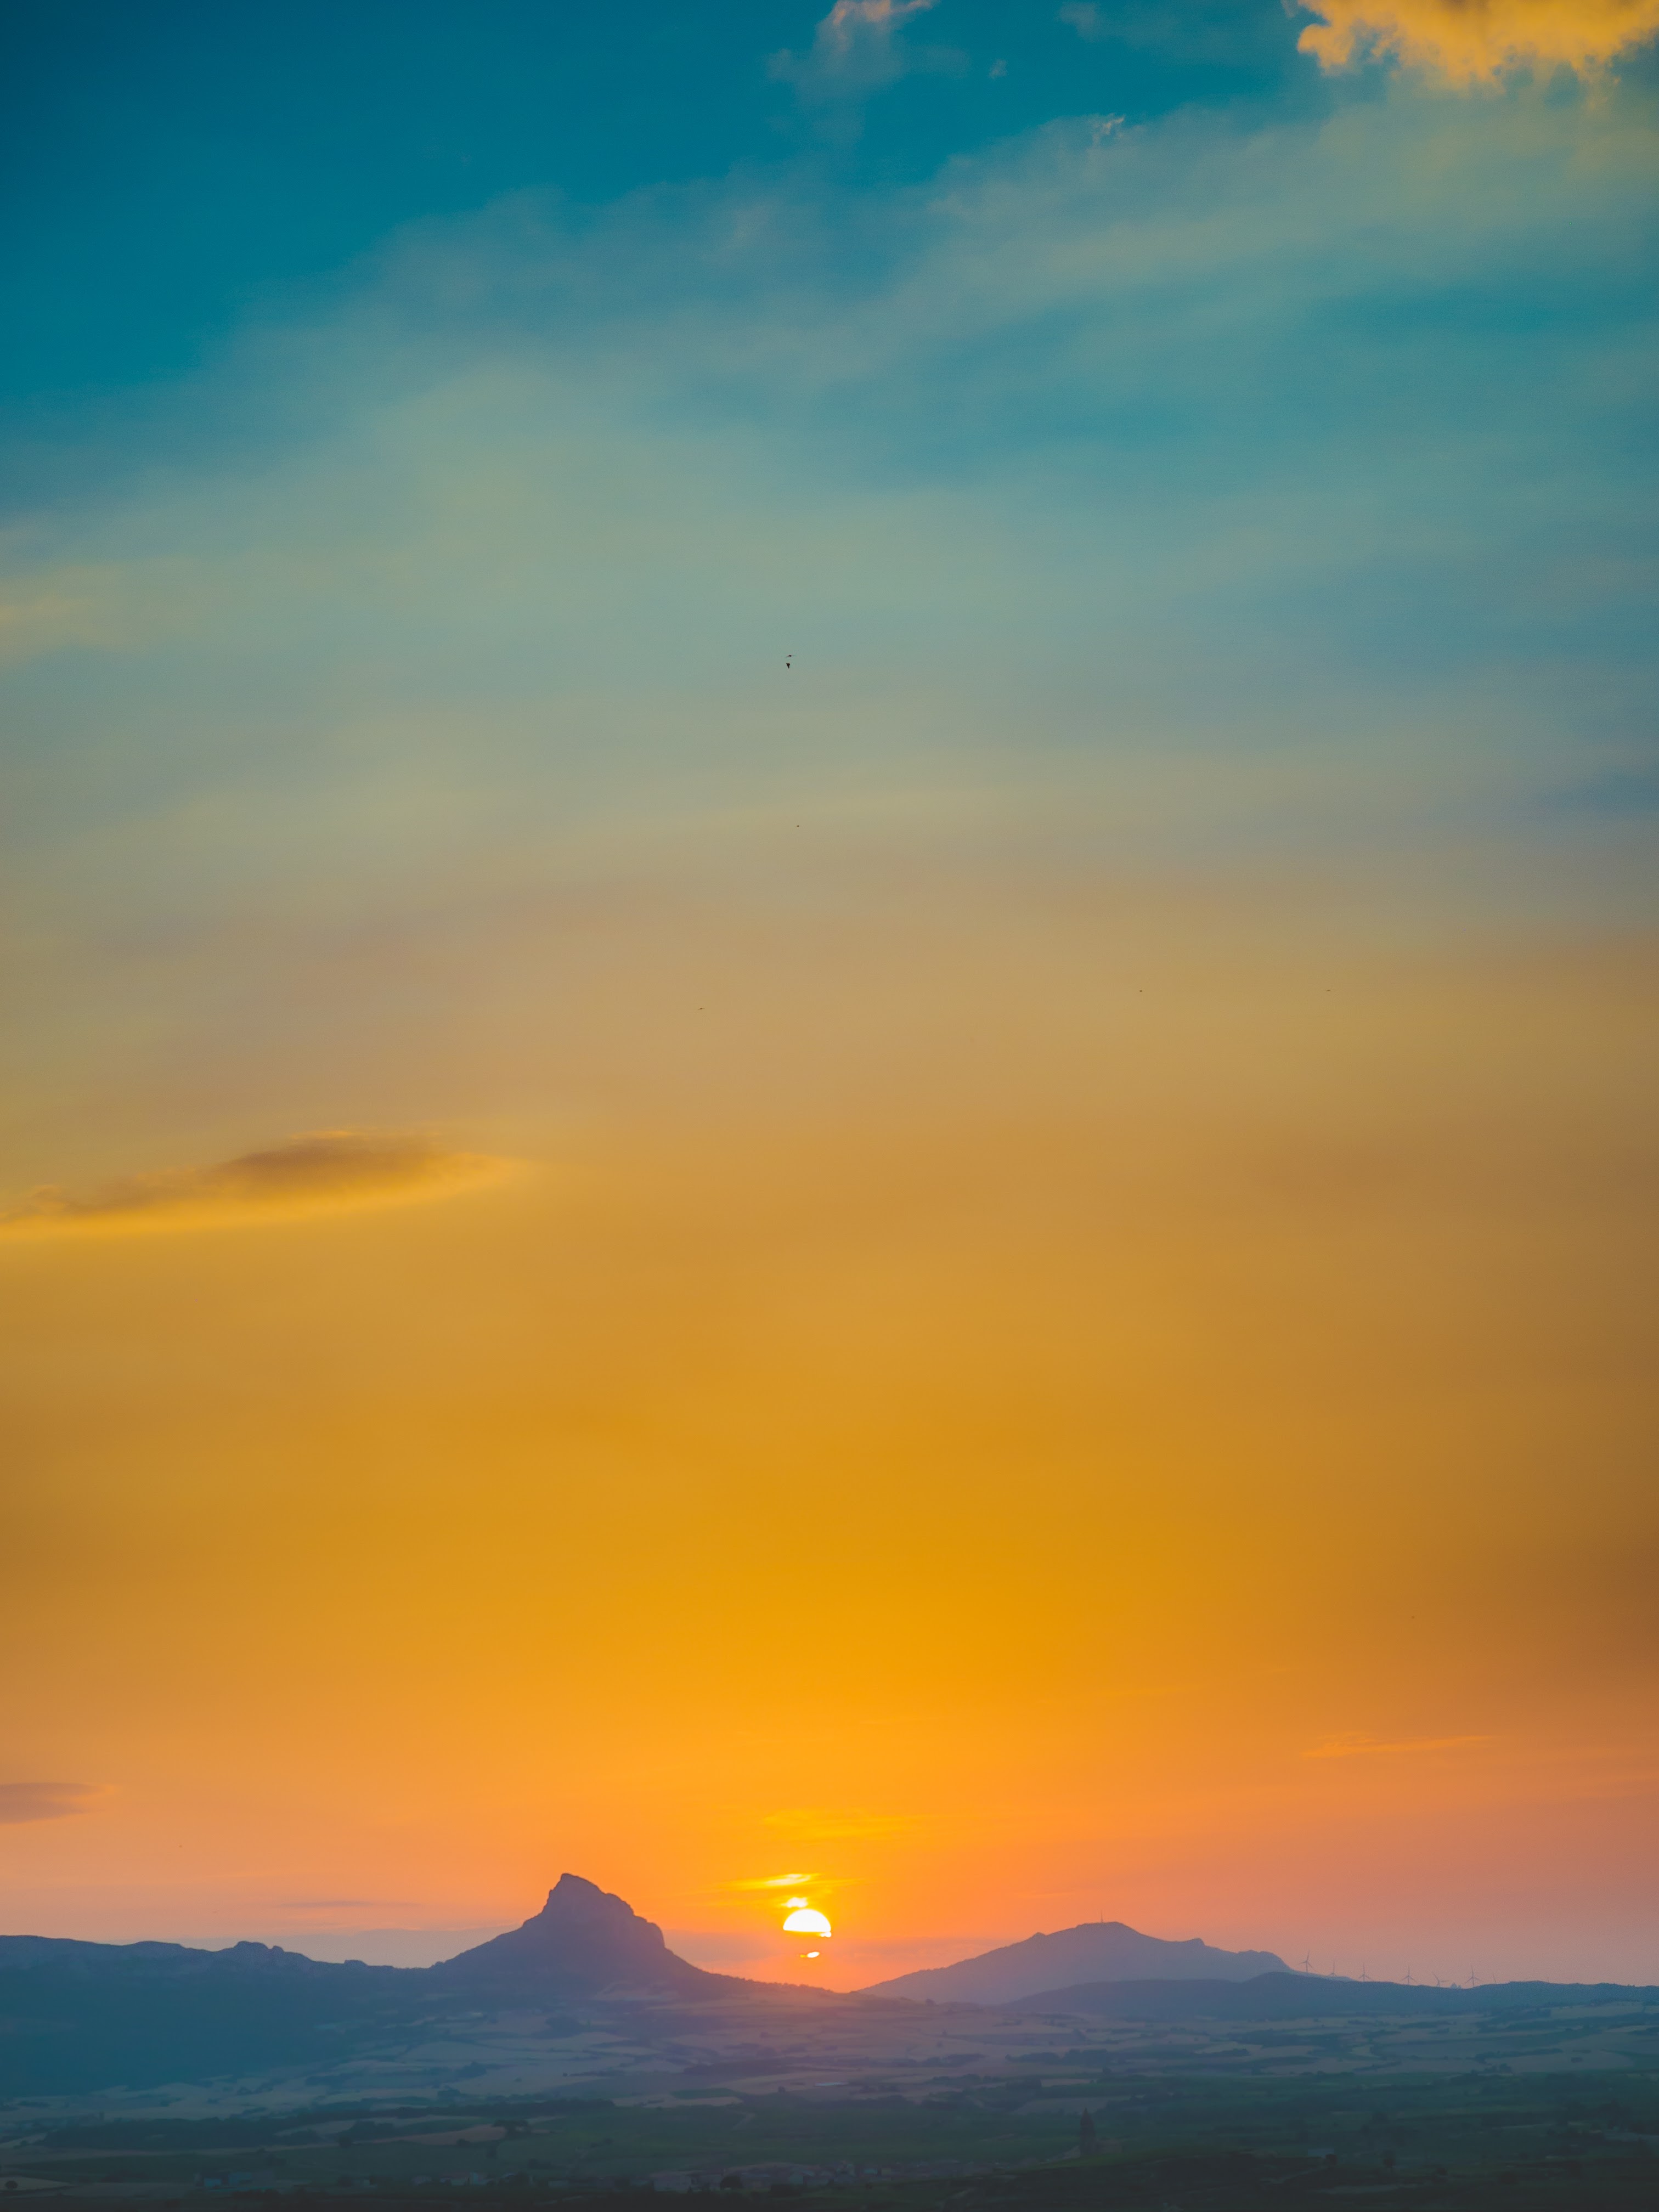 Sunrise between the peaks. LaGuardia, Spain, 2015